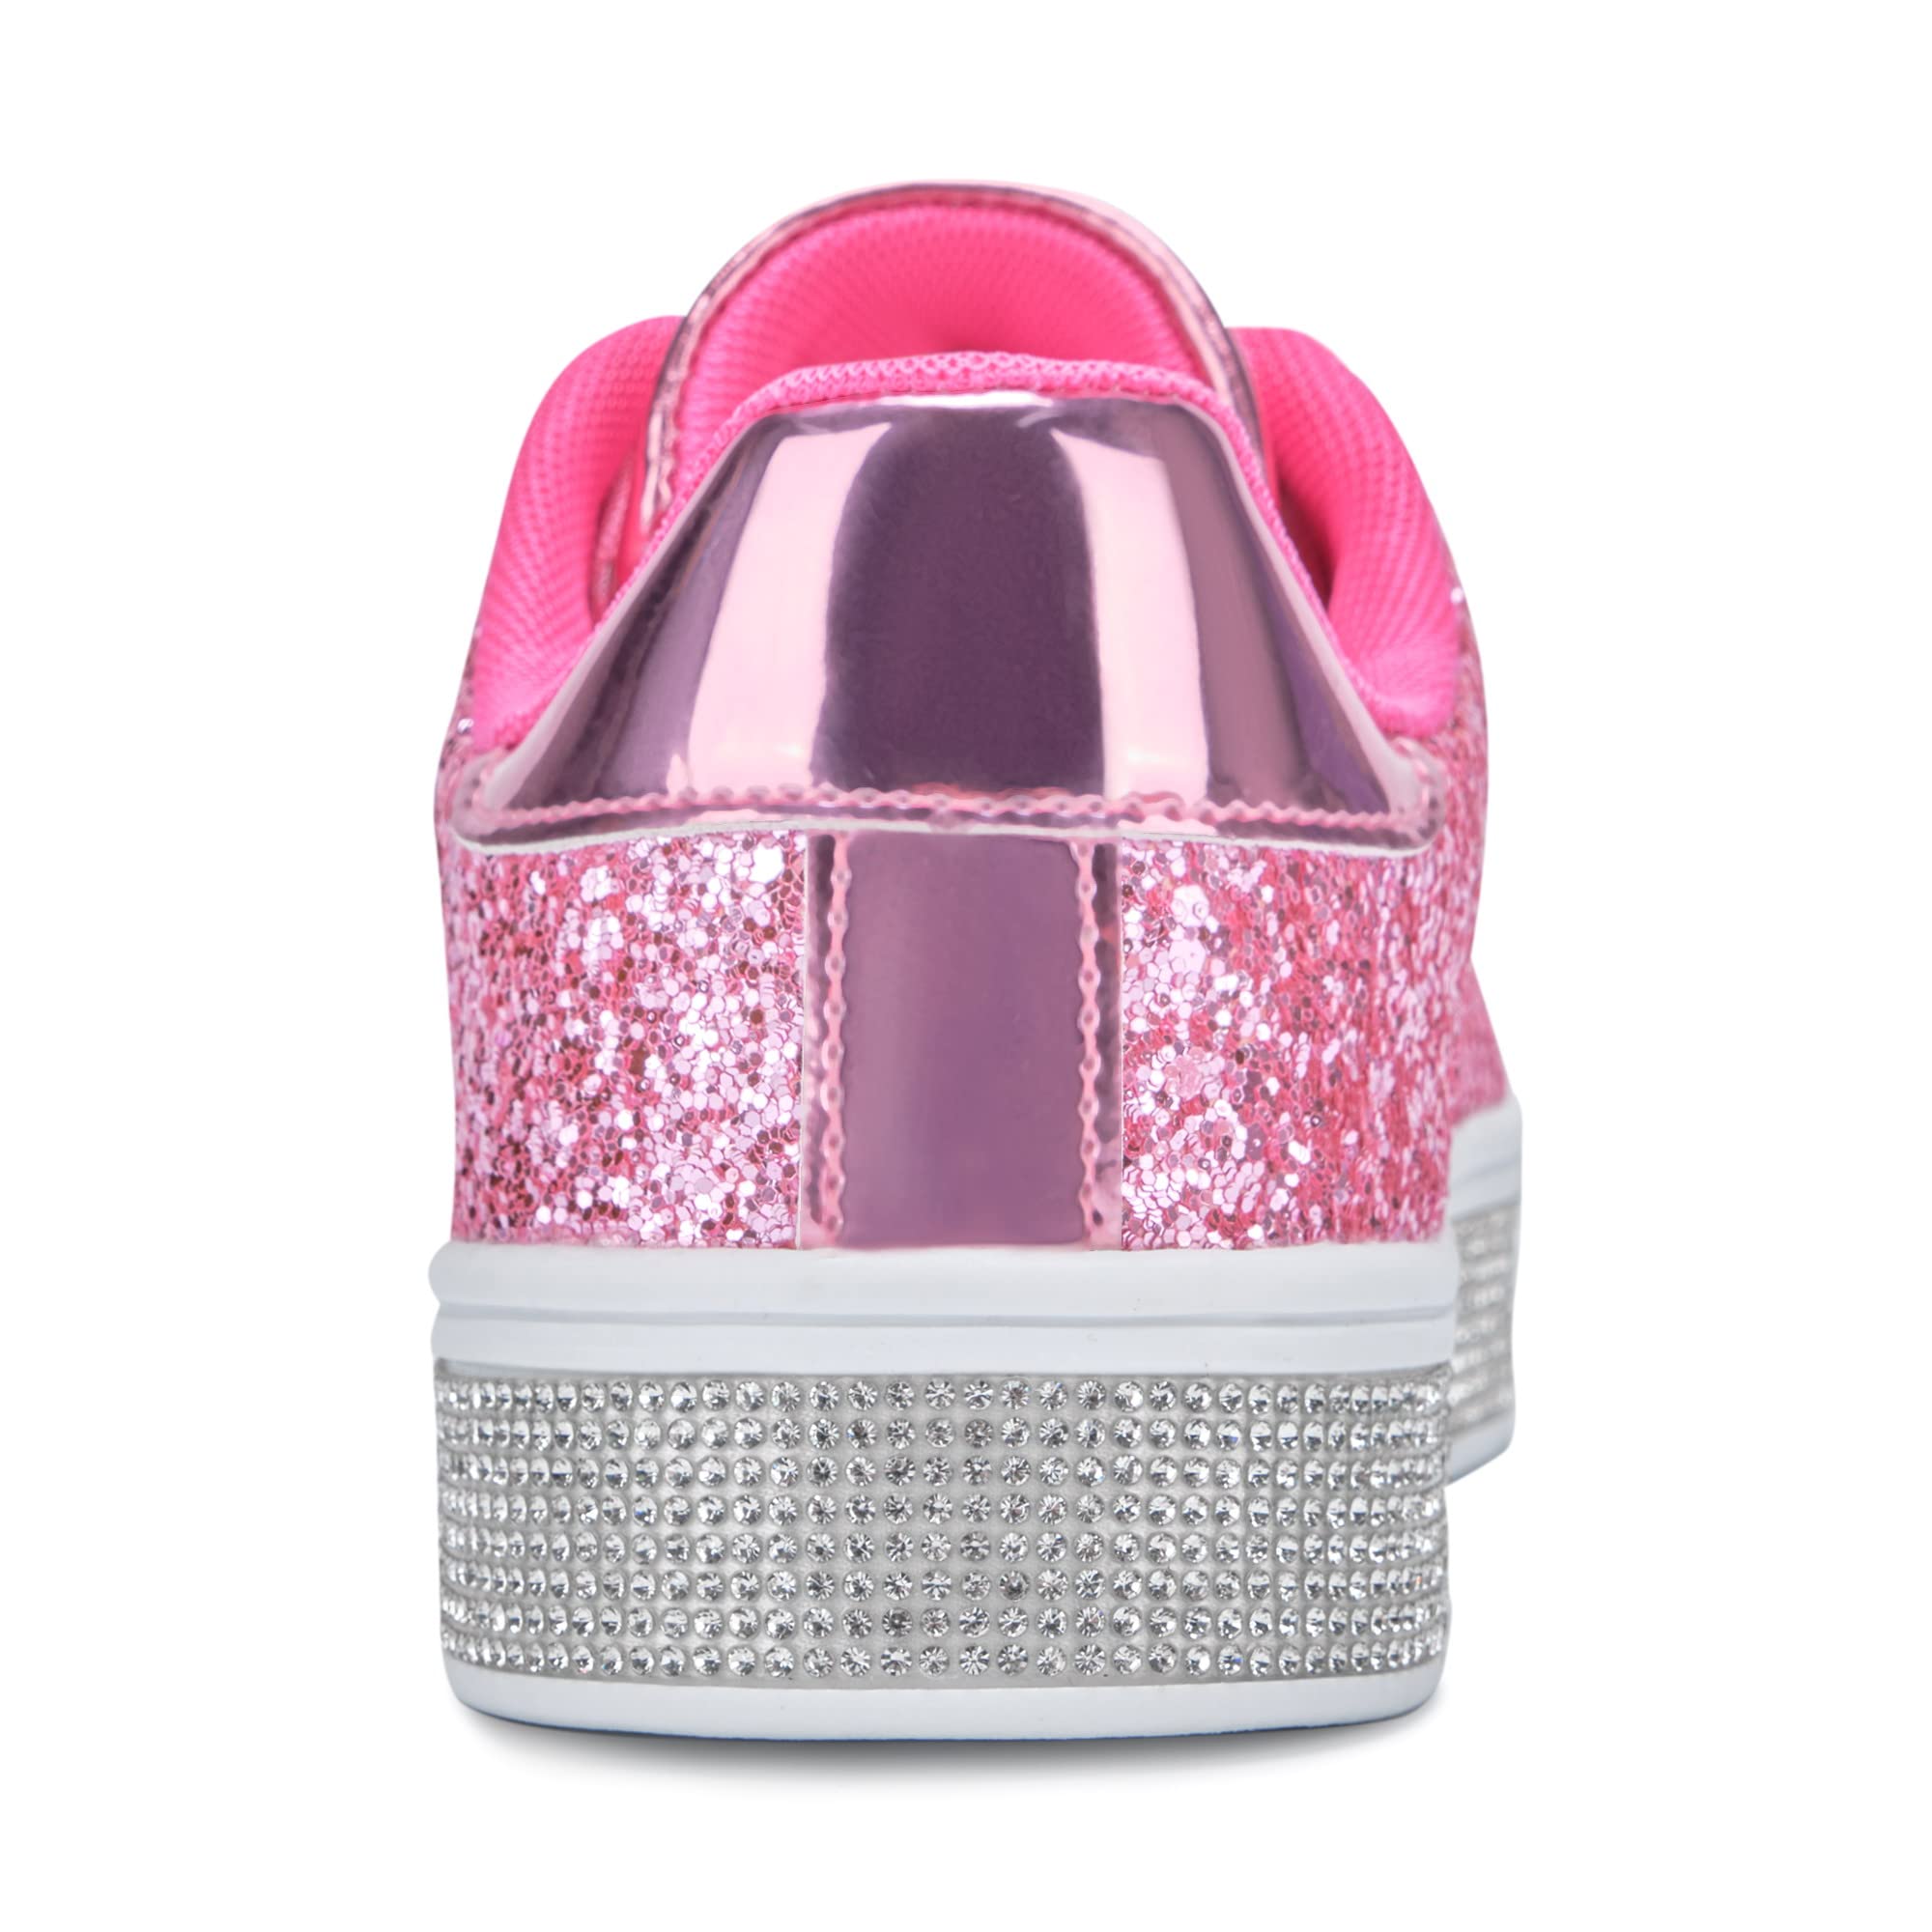 UUBARIS Women's Glitter Tennis Sneakers Neon Dressy Sparkly